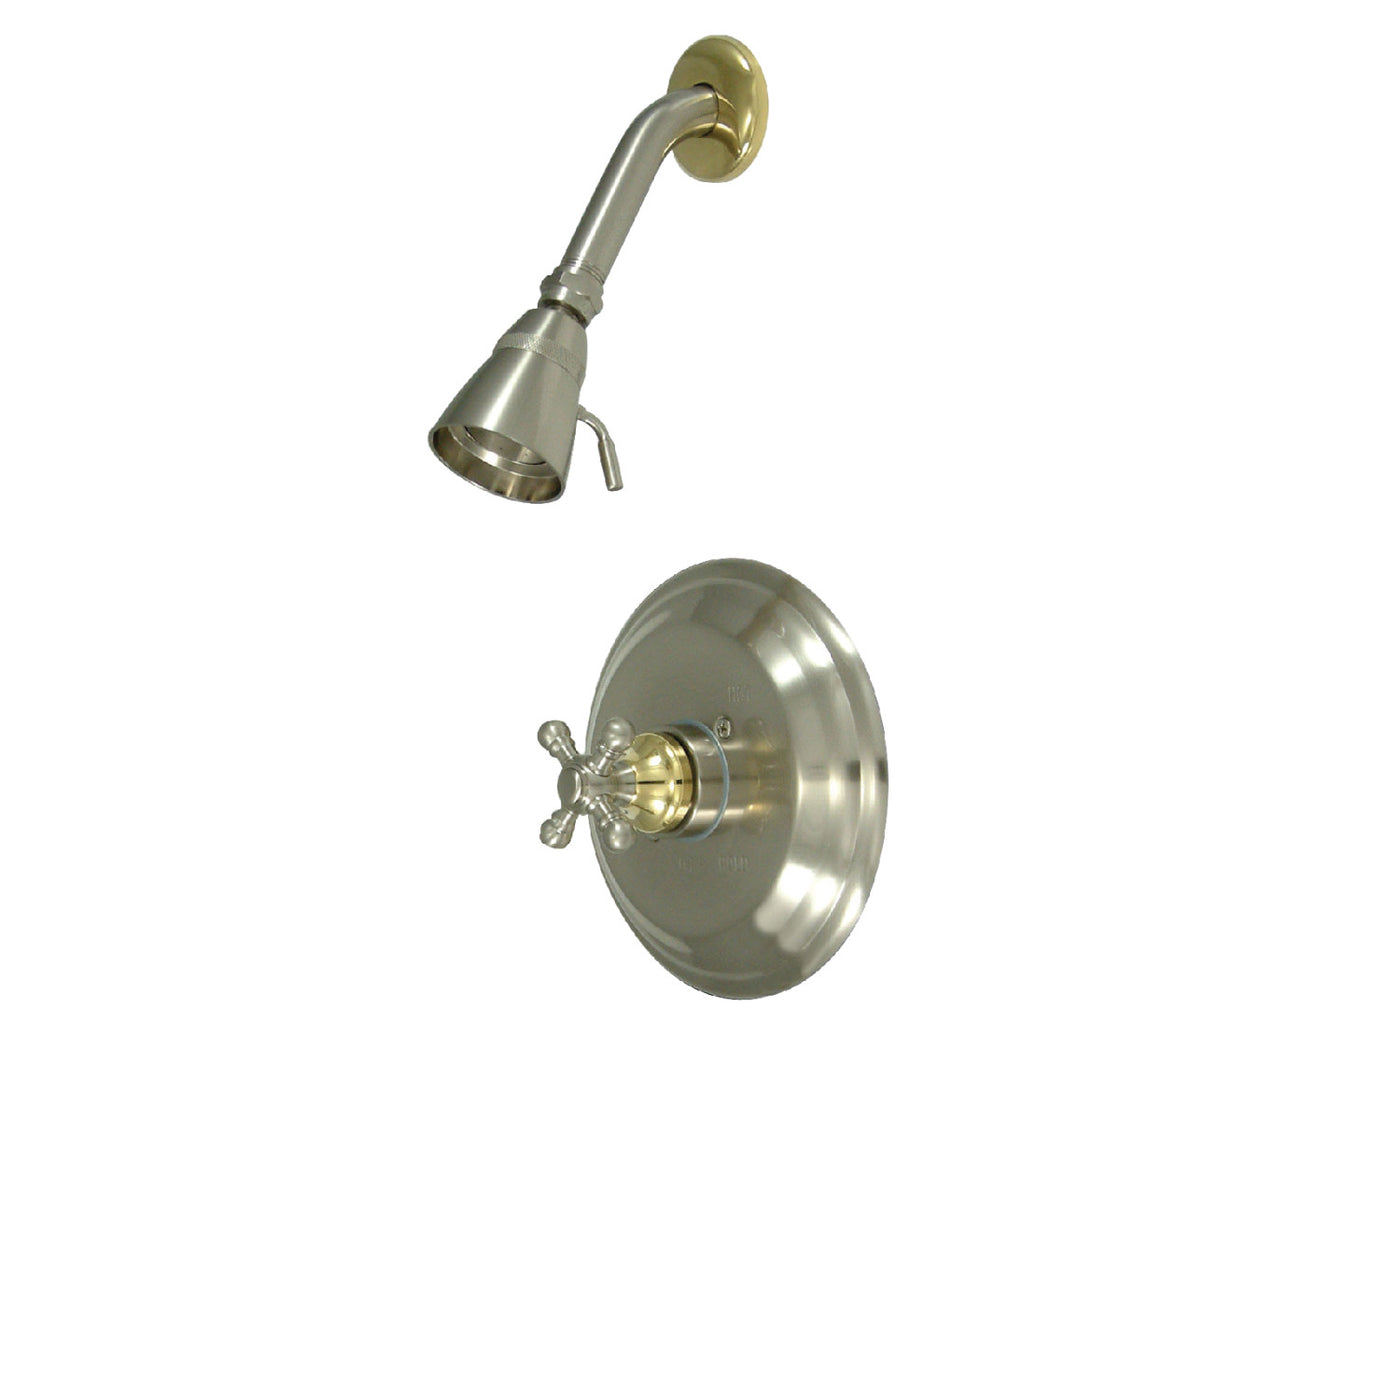 Elements of Design EB2639BXSO Pressure Balanced Shower Faucet, Brushed Nickel/Polished Brass